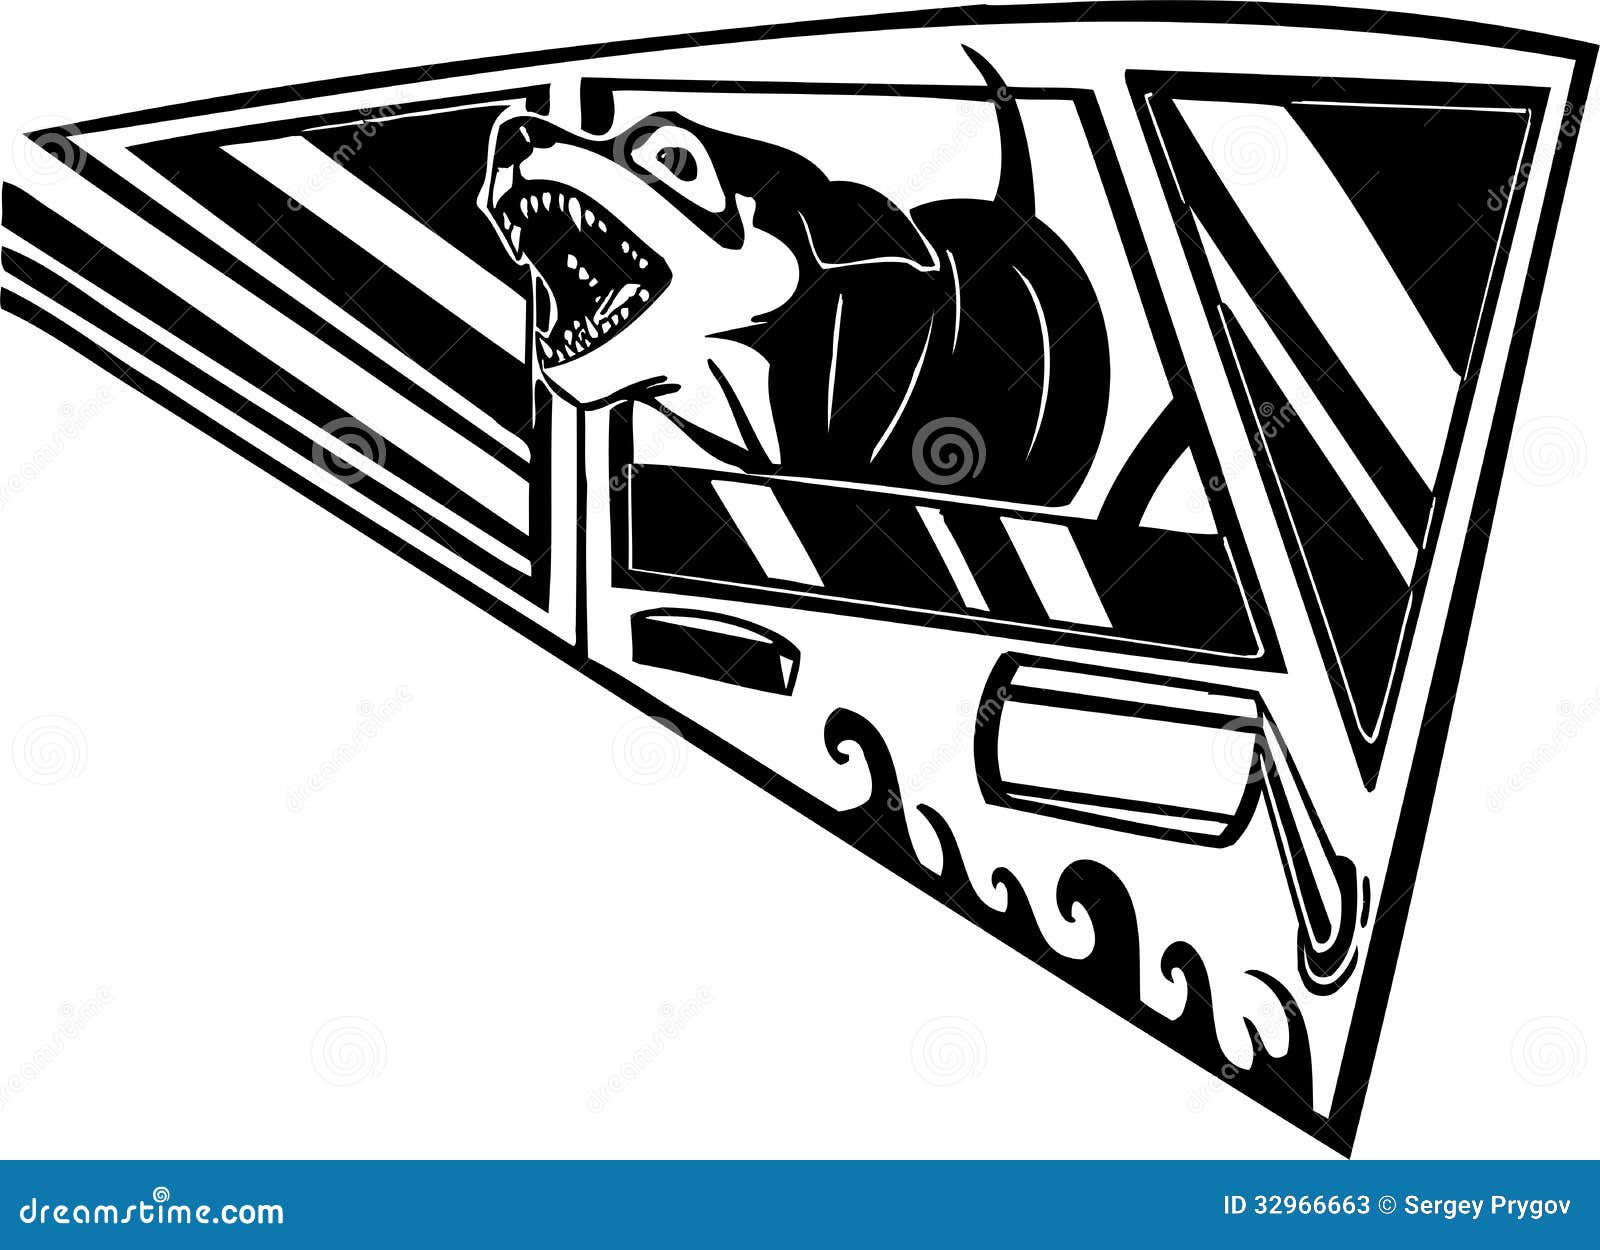 Barking Dog. Vector Illustration. Stock Photos - Image: 32966663